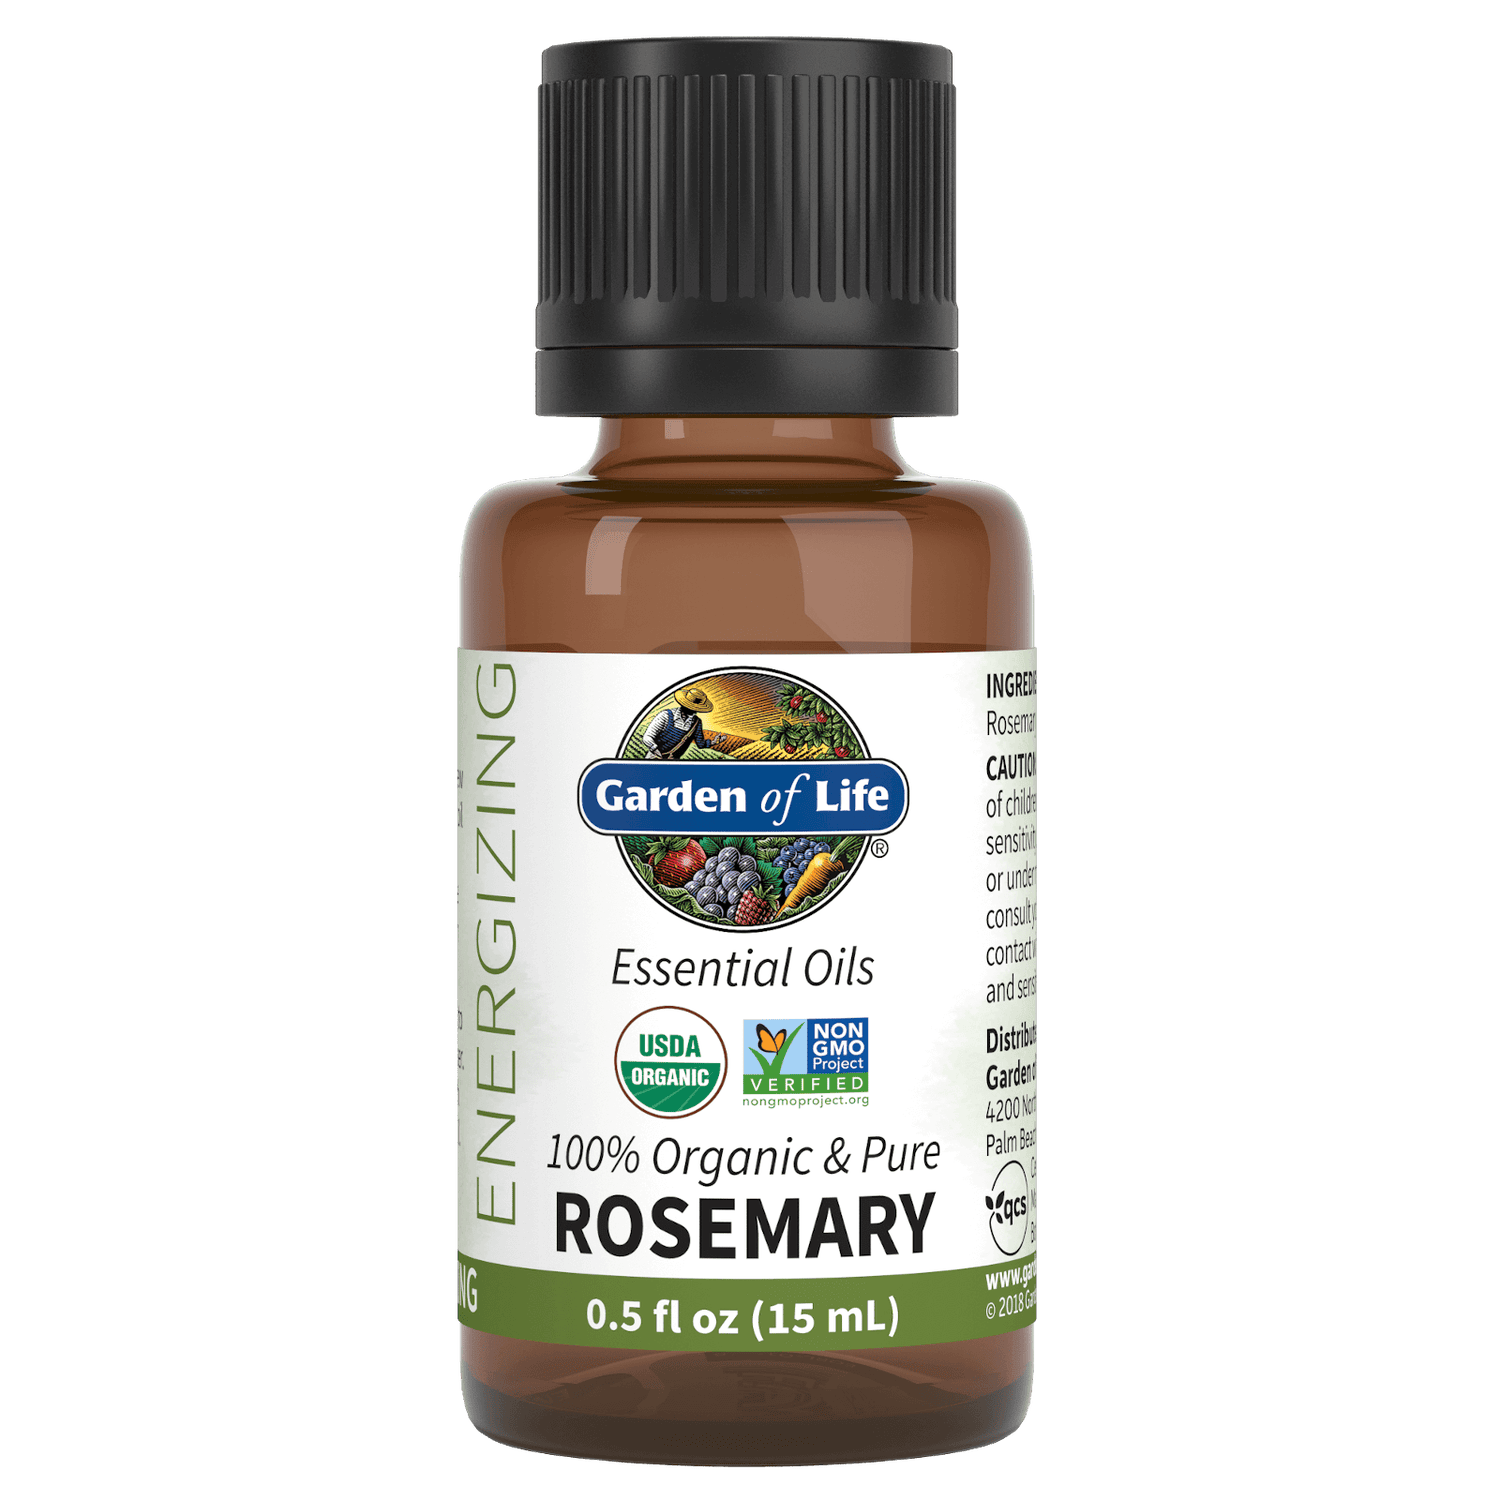 Aceite esencial ecológico - Romero - 15 ml